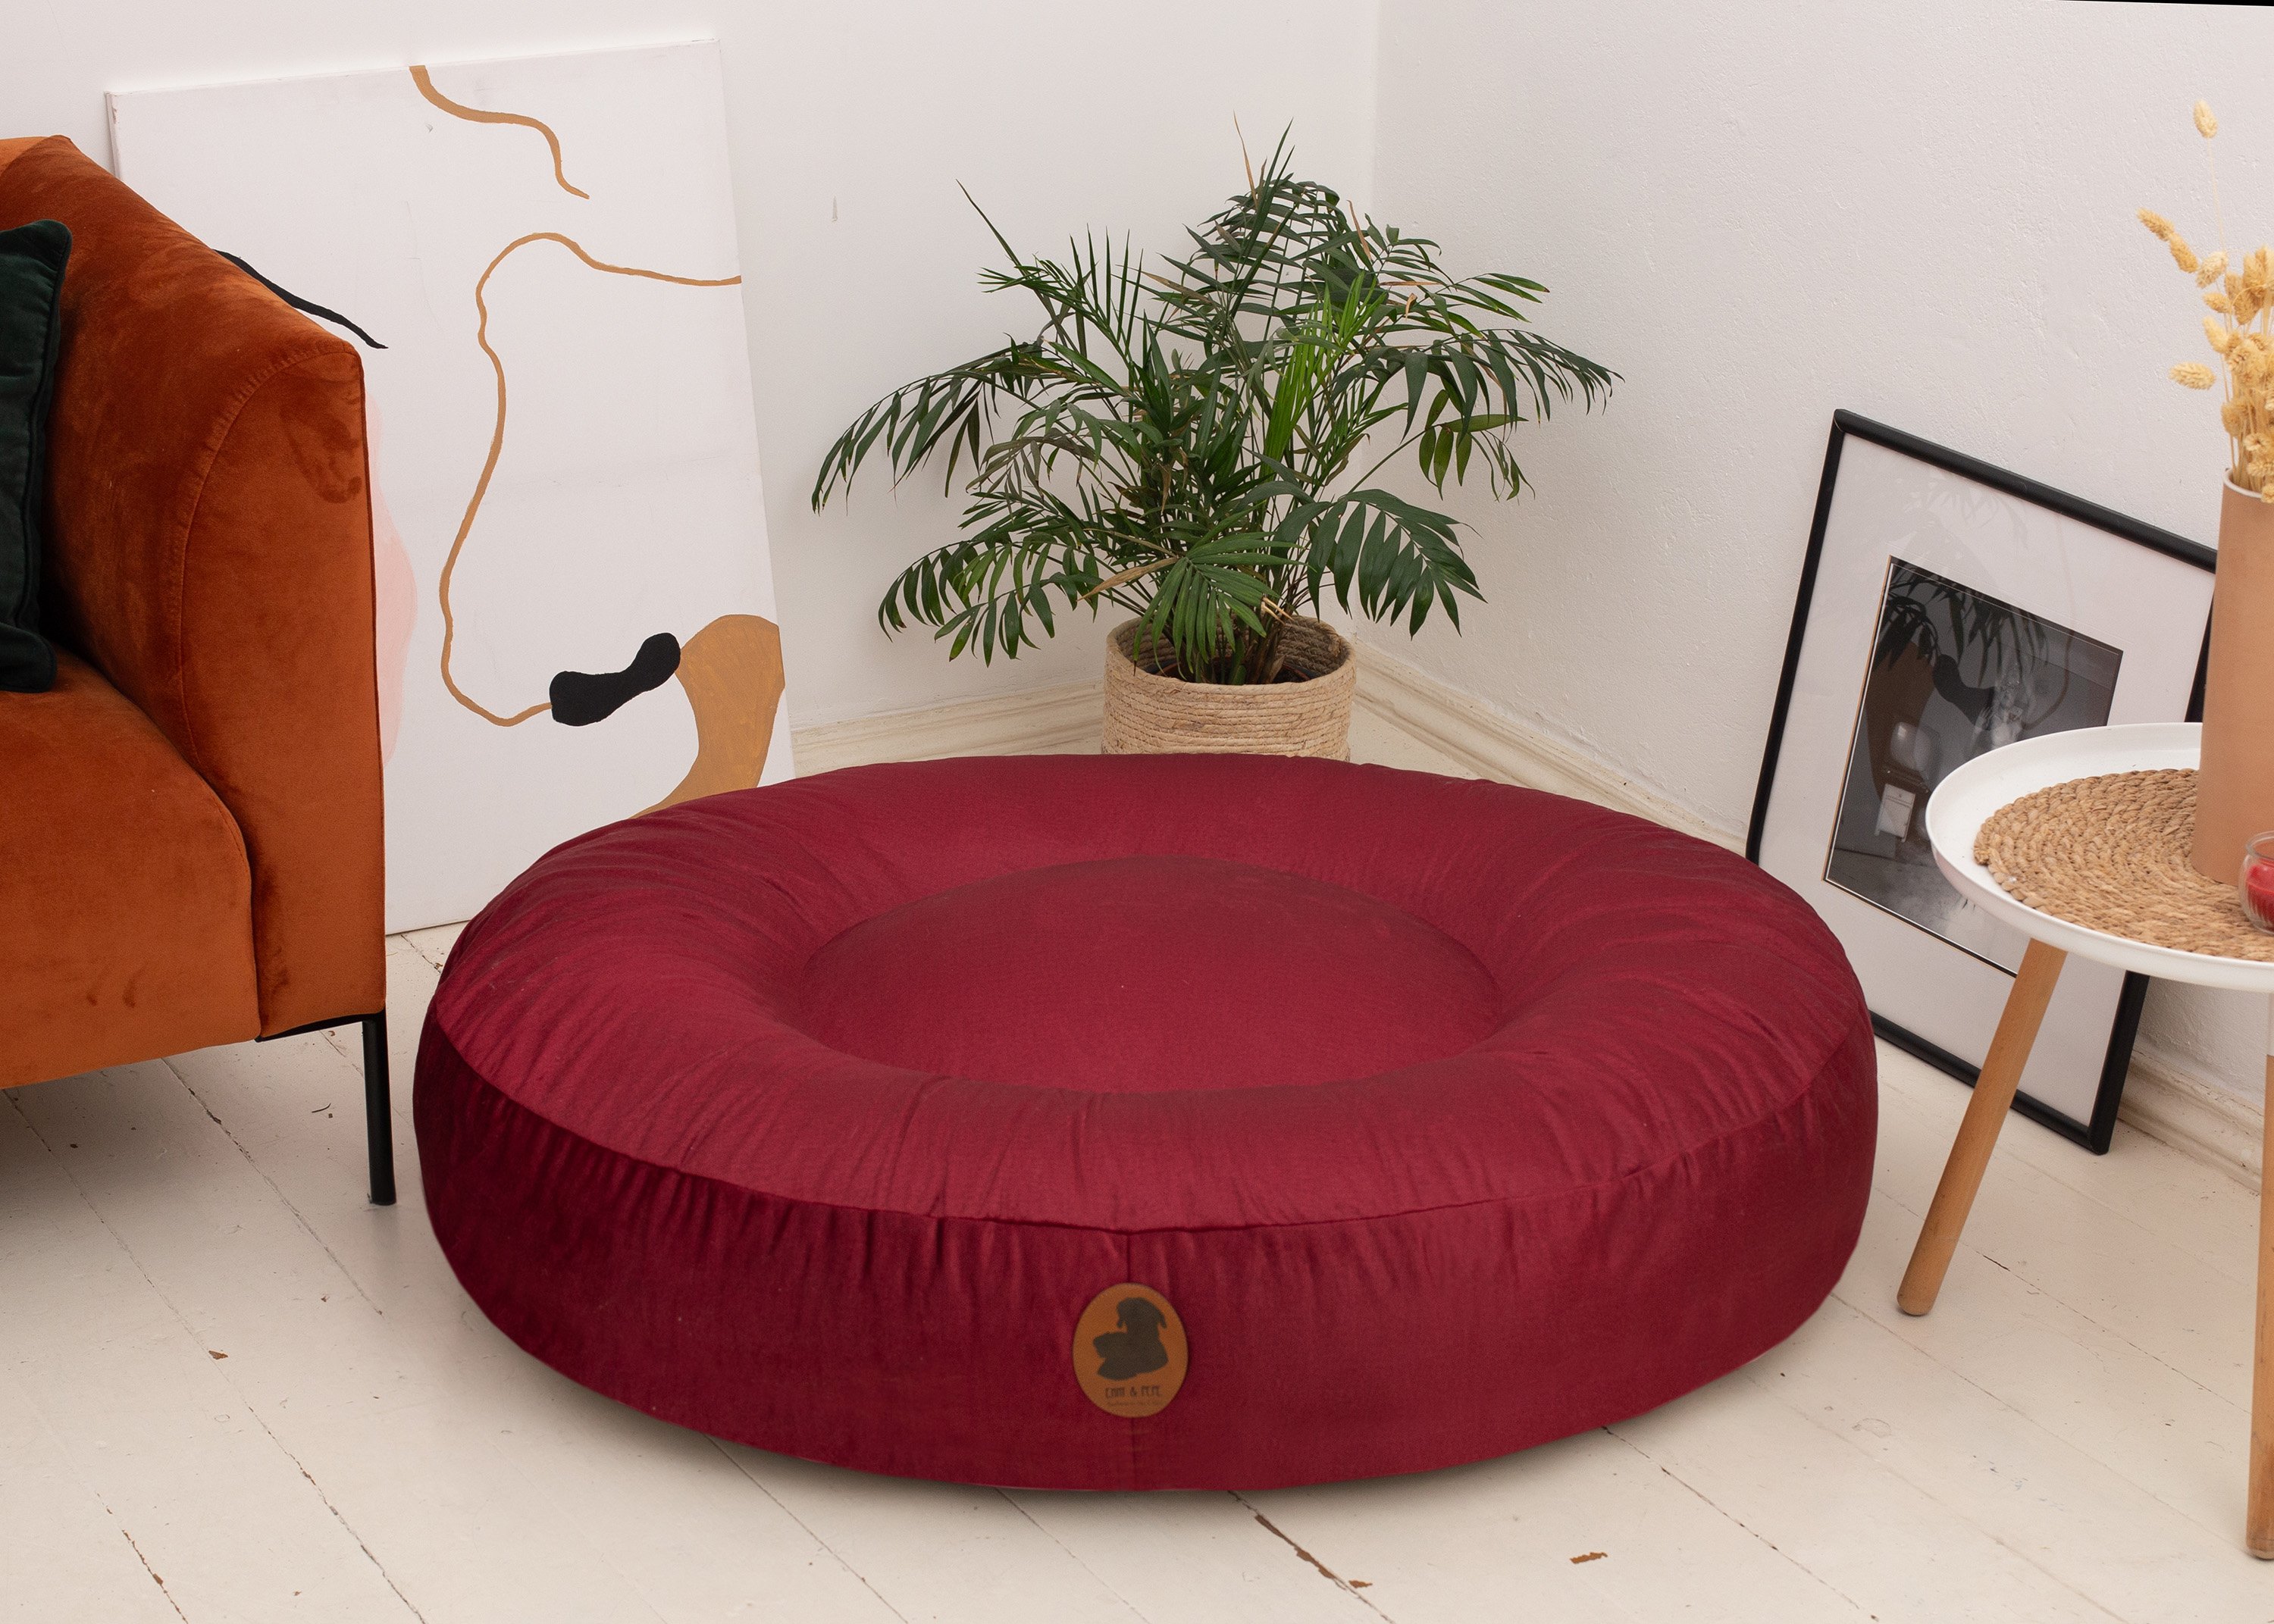 Wau-Bed Pets Friendly Royal Red Eckig L (120x100cm)